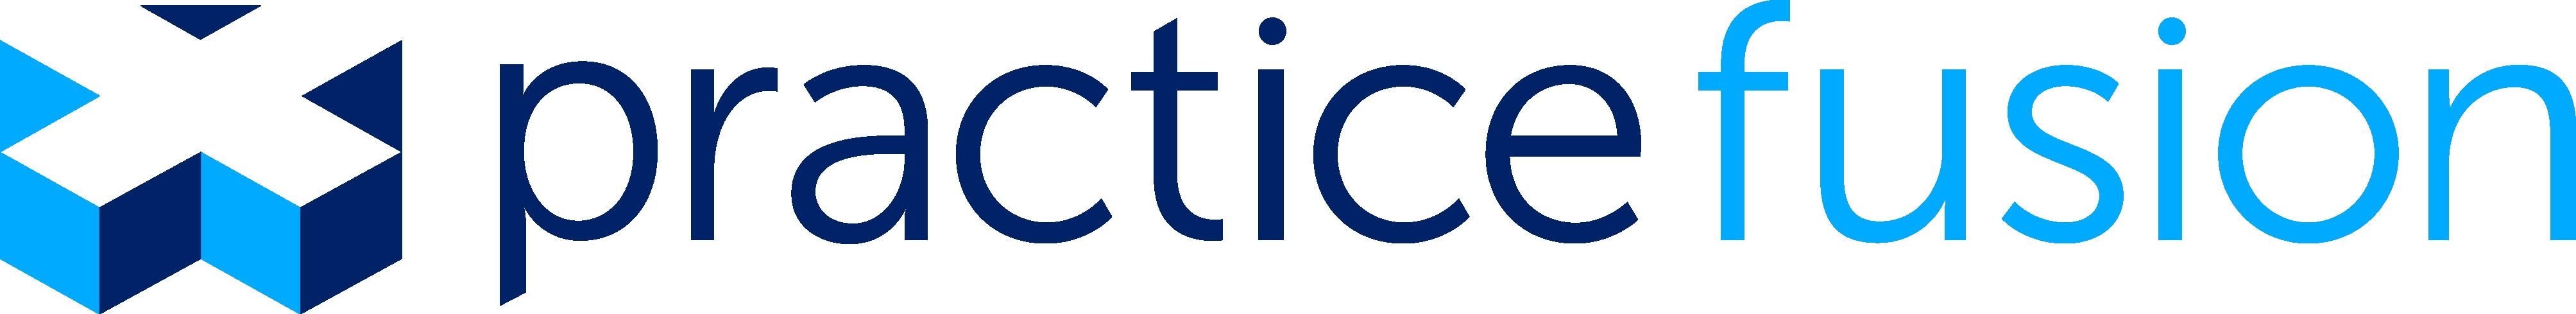 Practice Fusion Company Logo